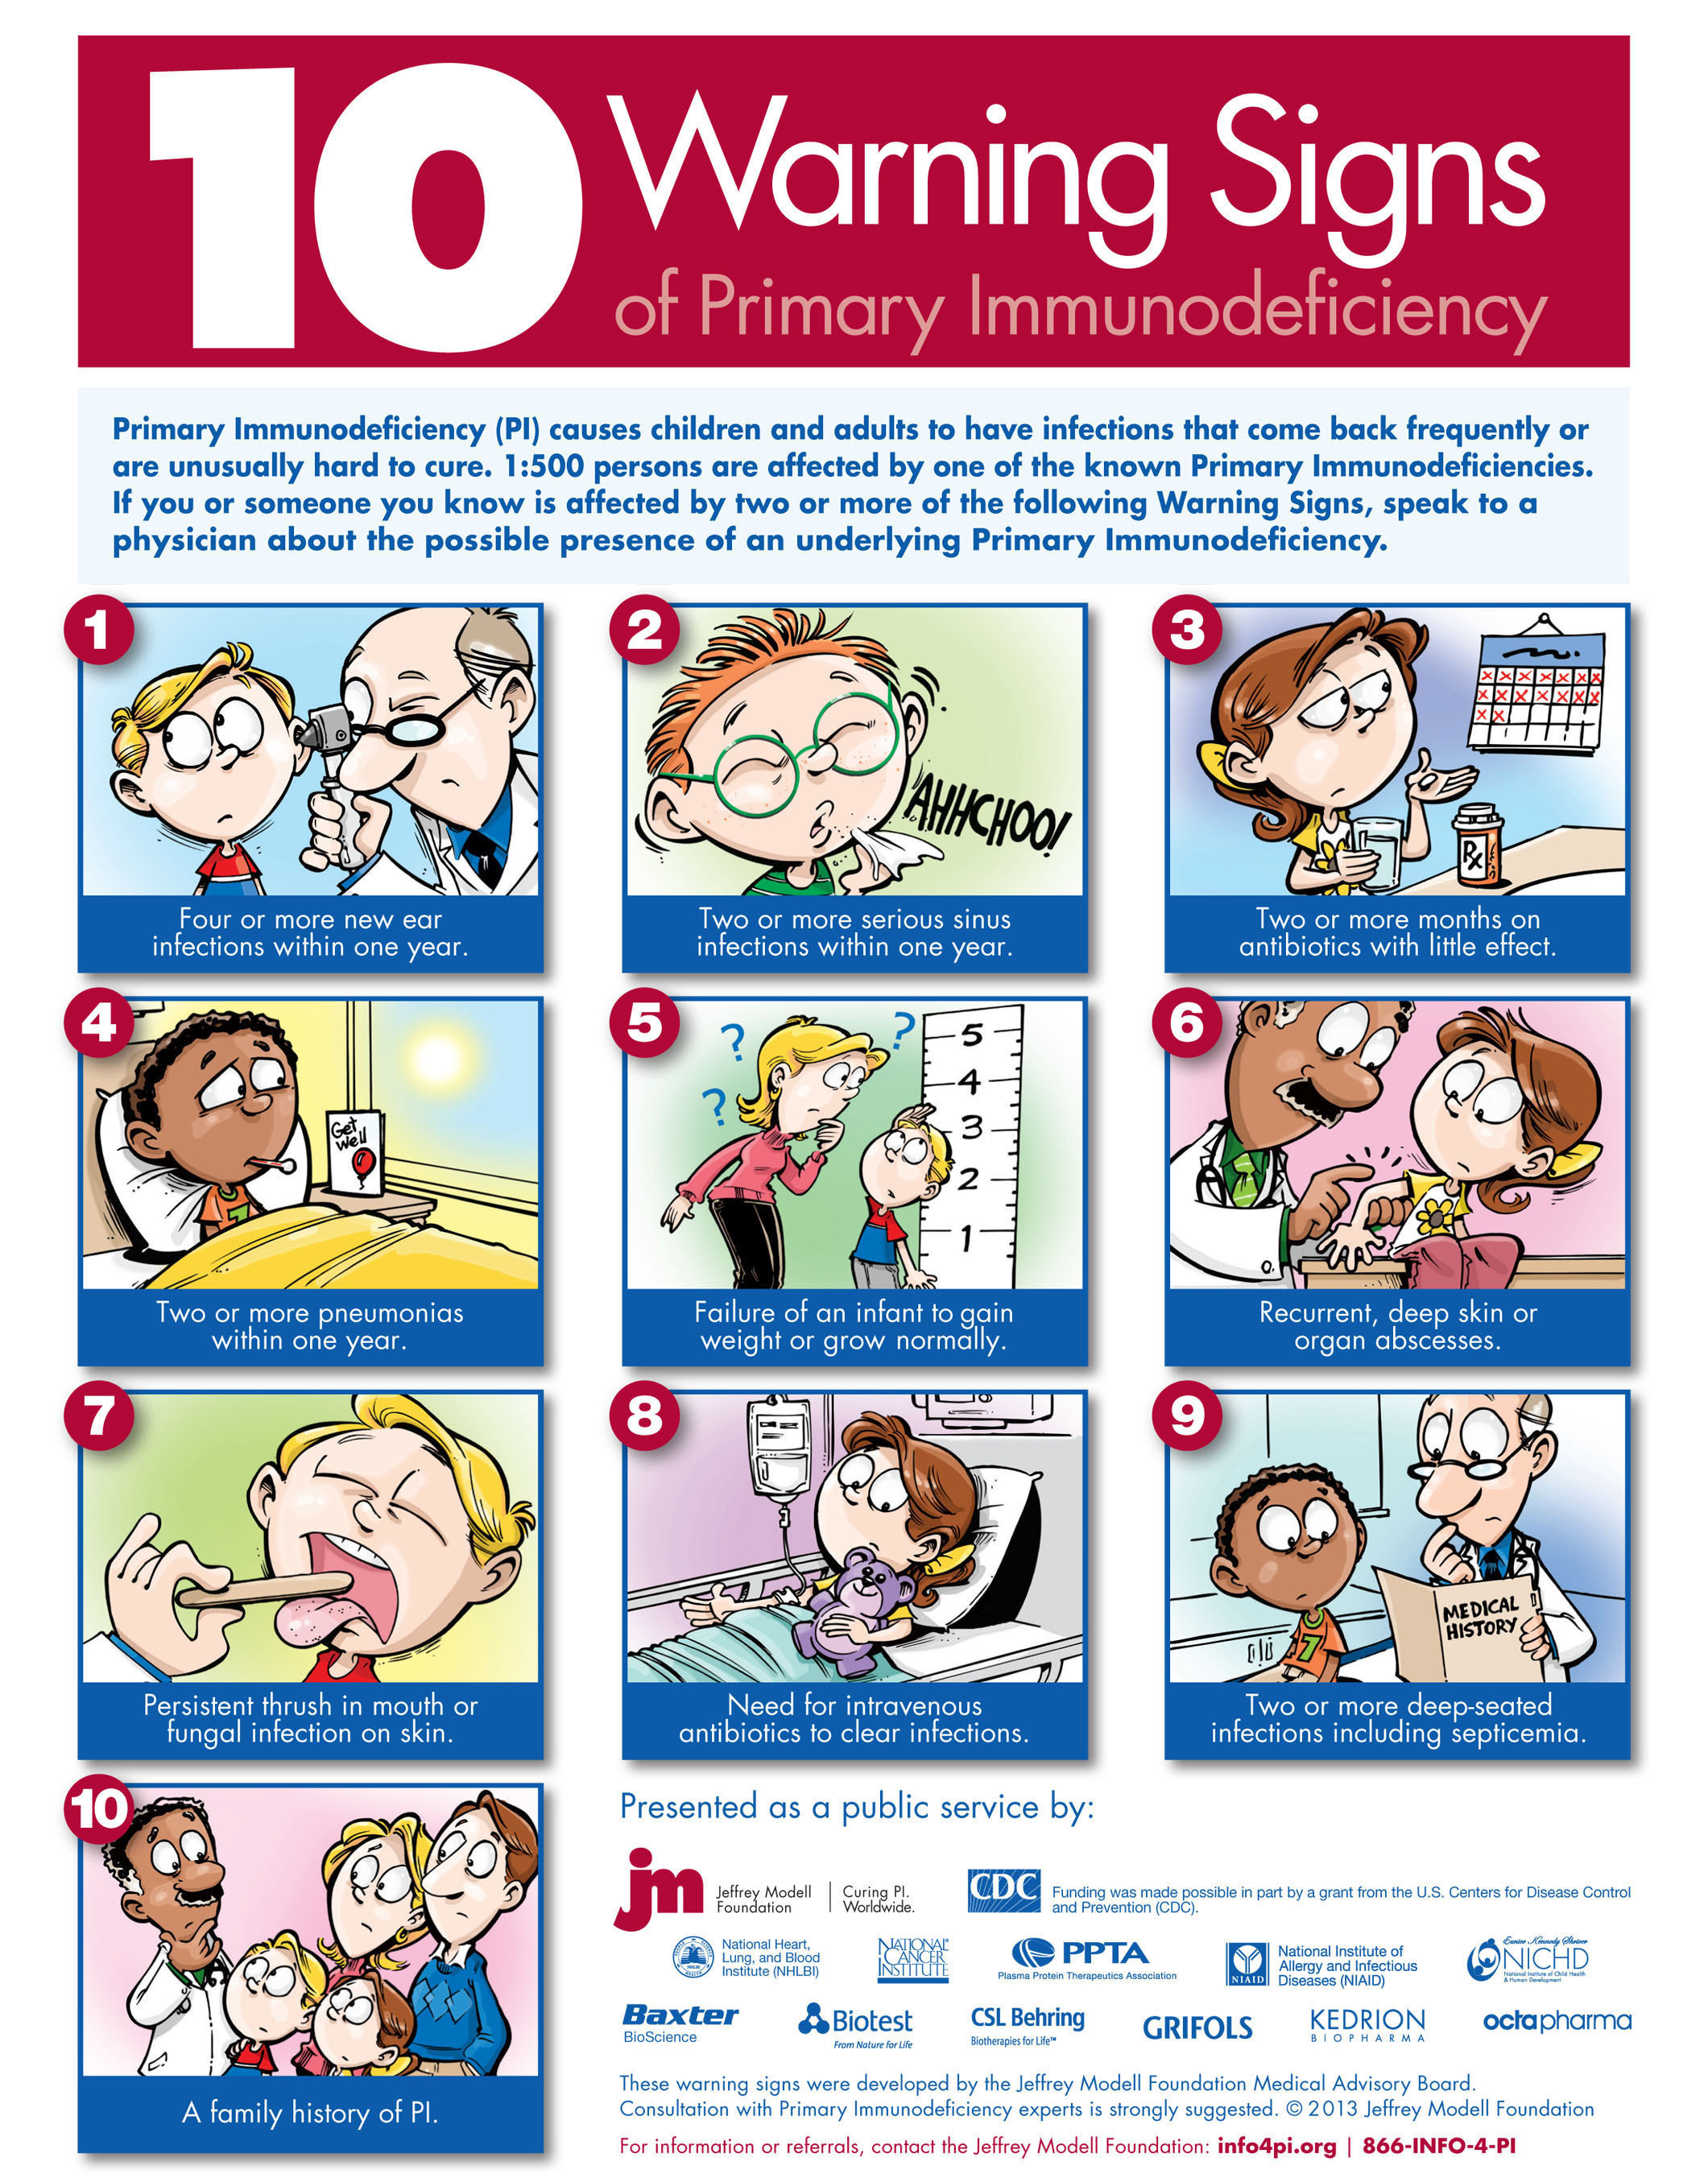 10 Warning Signs of Primary Immunodeficiency. (PRNewsFoto/Jeffrey Modell Foundation) (PRNewsFoto/JEFFREY MODELL FOUNDATION)